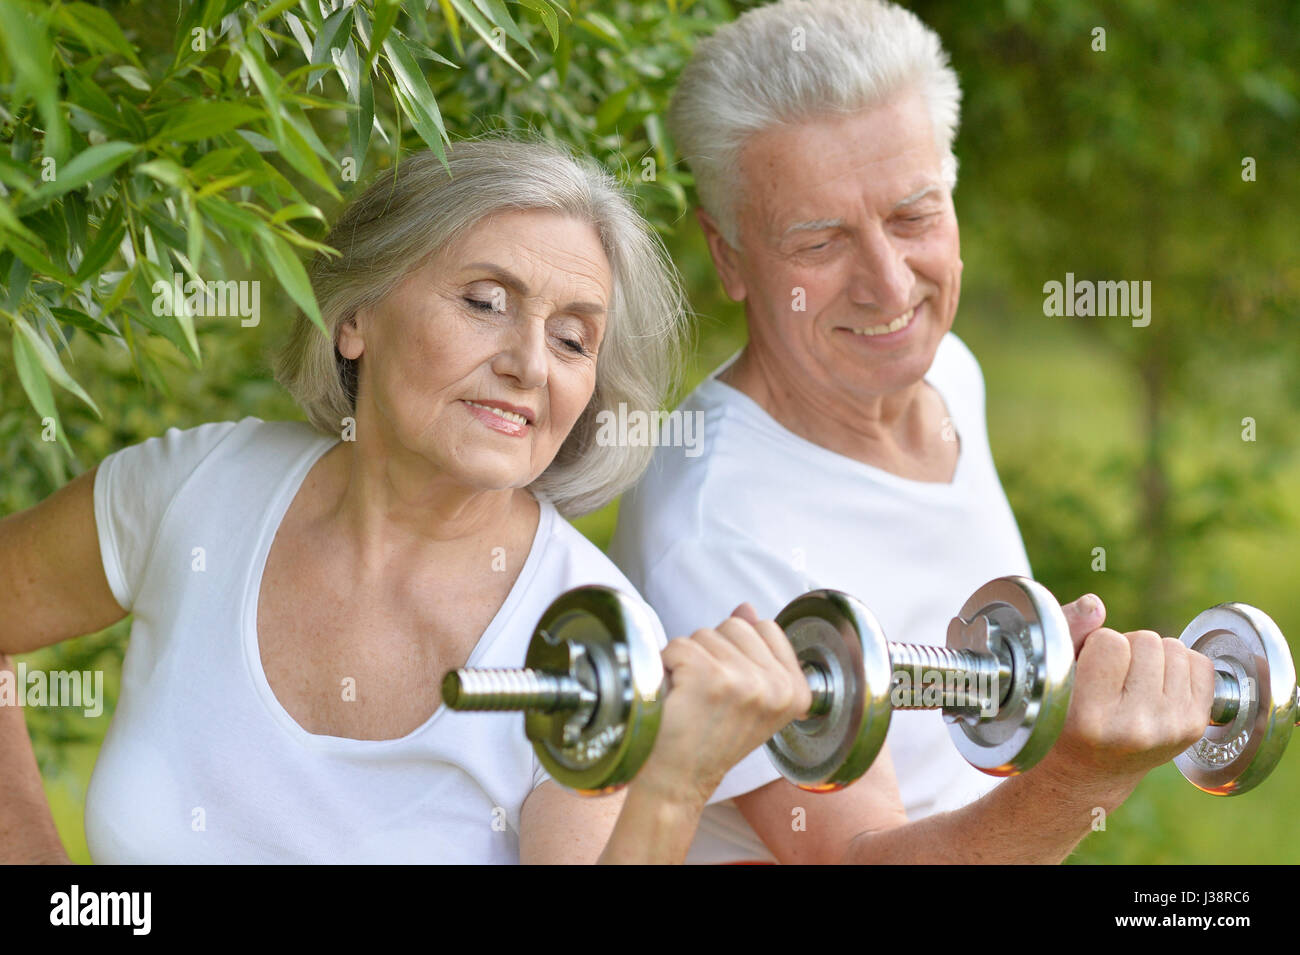 Beautiful elderly couple with dumbbells Stock Photo